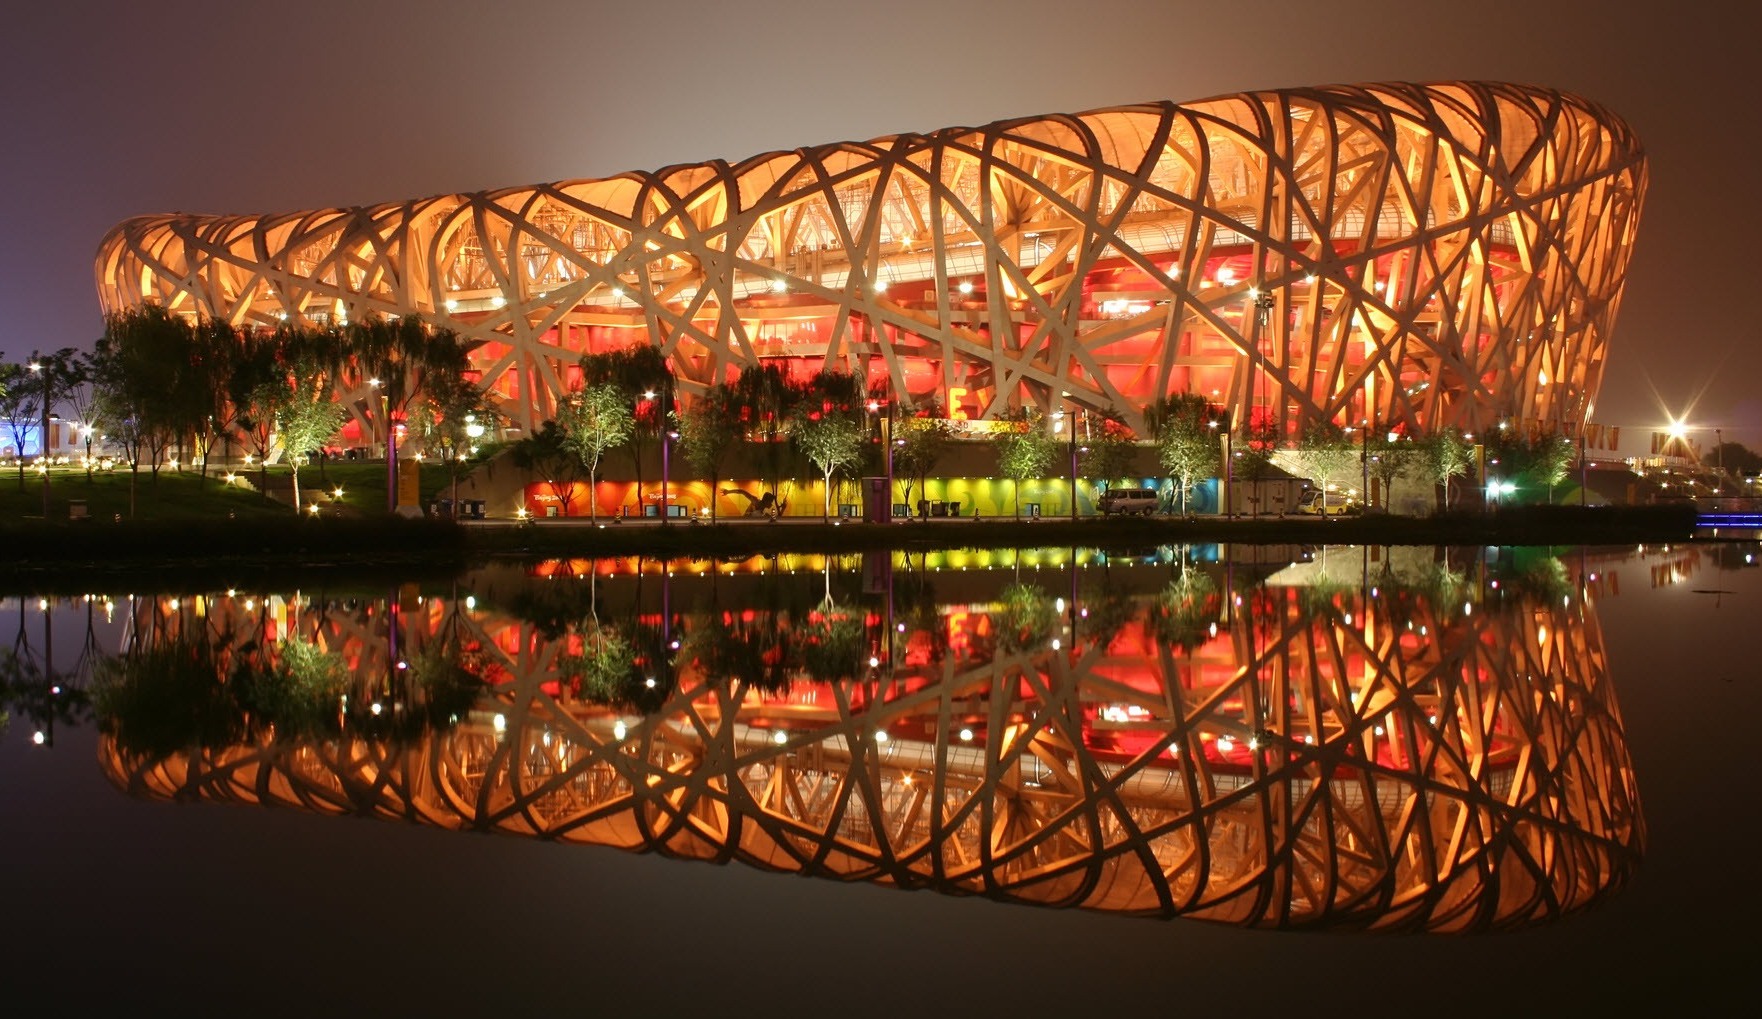 Beijing national stadium.jpg